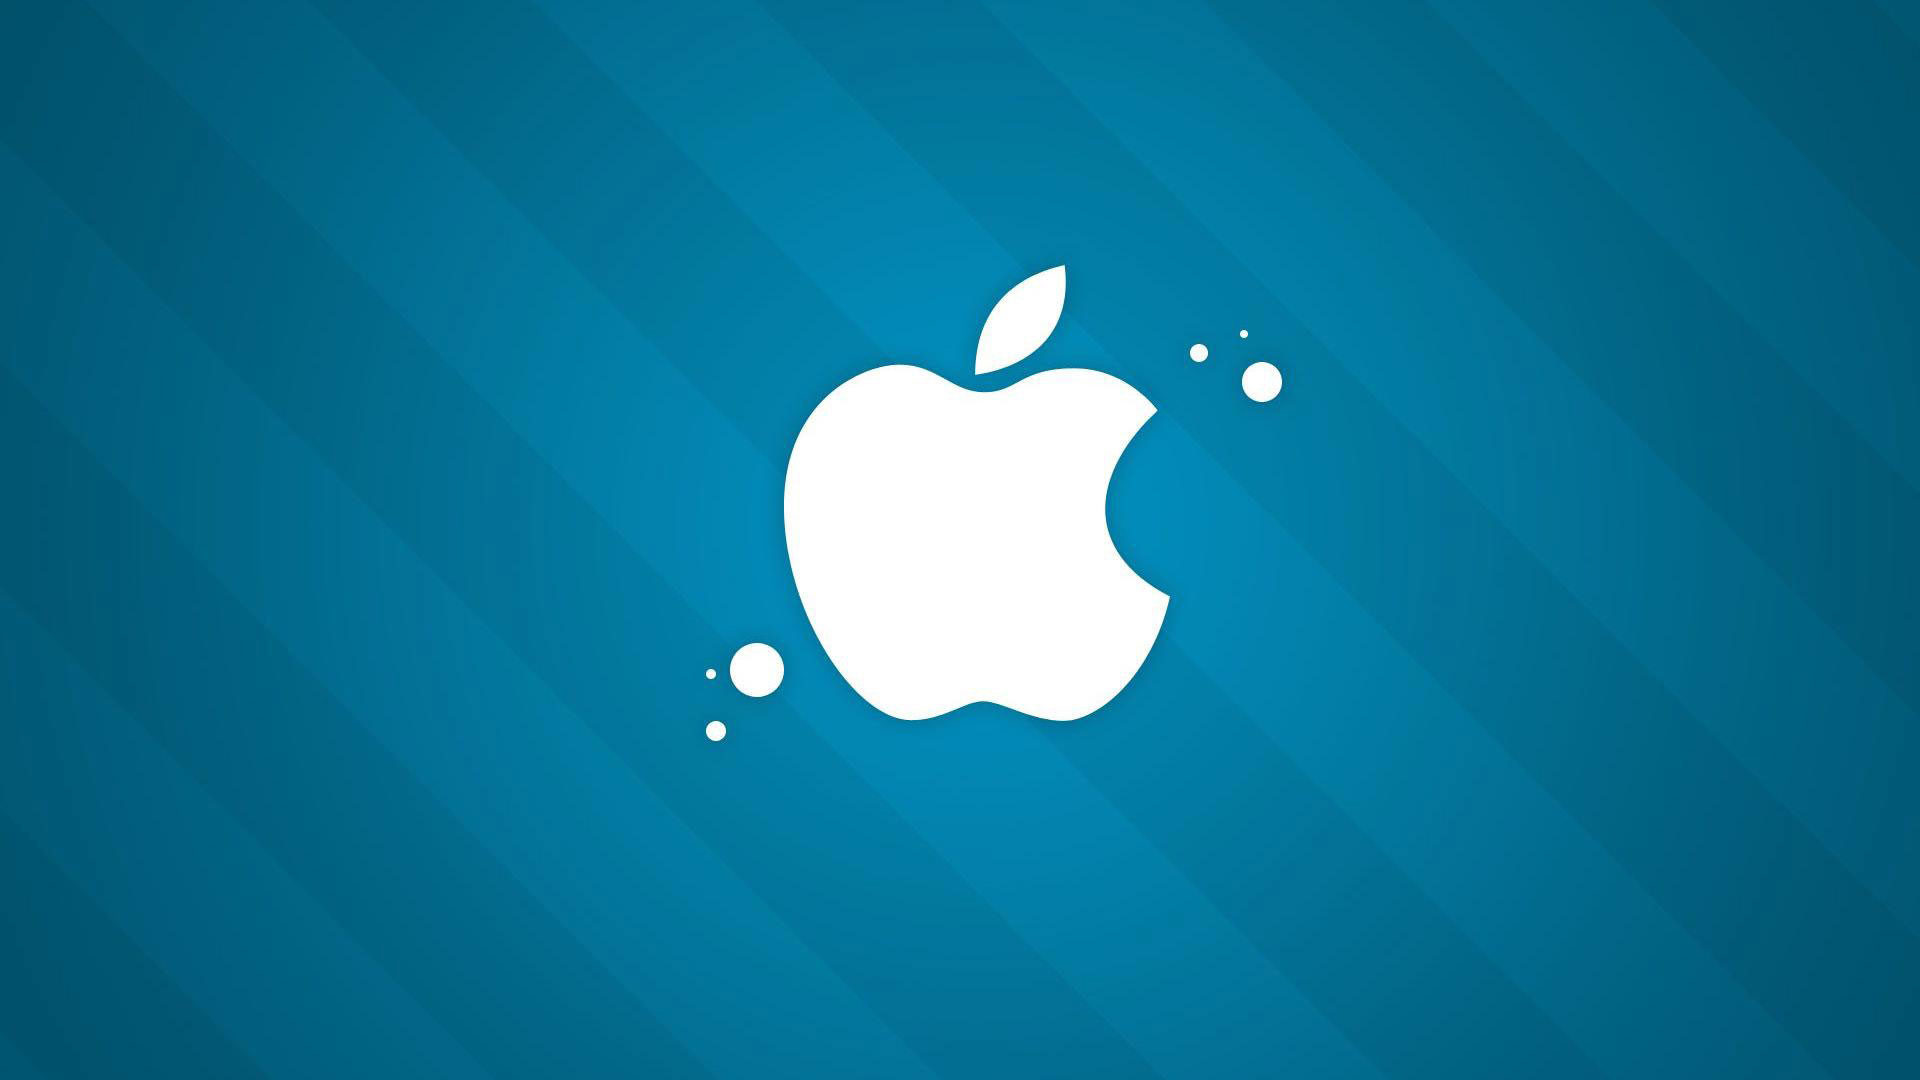 hd pics photos cool blue white apple logo hd quality desktop background  wallpaper